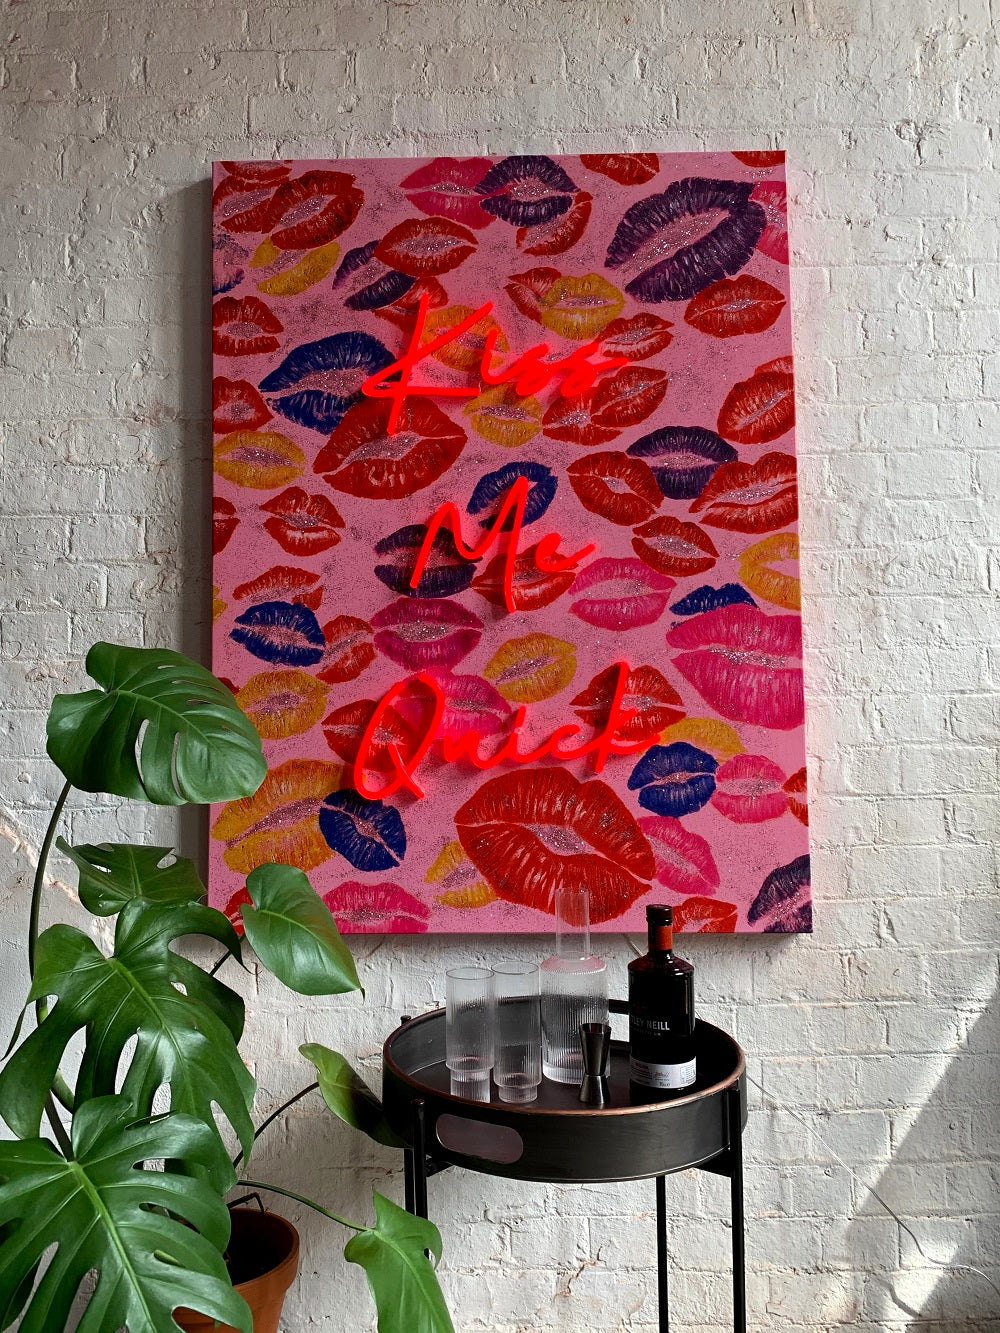 'Kiss Me Quick' Wall Artwork - LED Neon - Locomocean Ltd